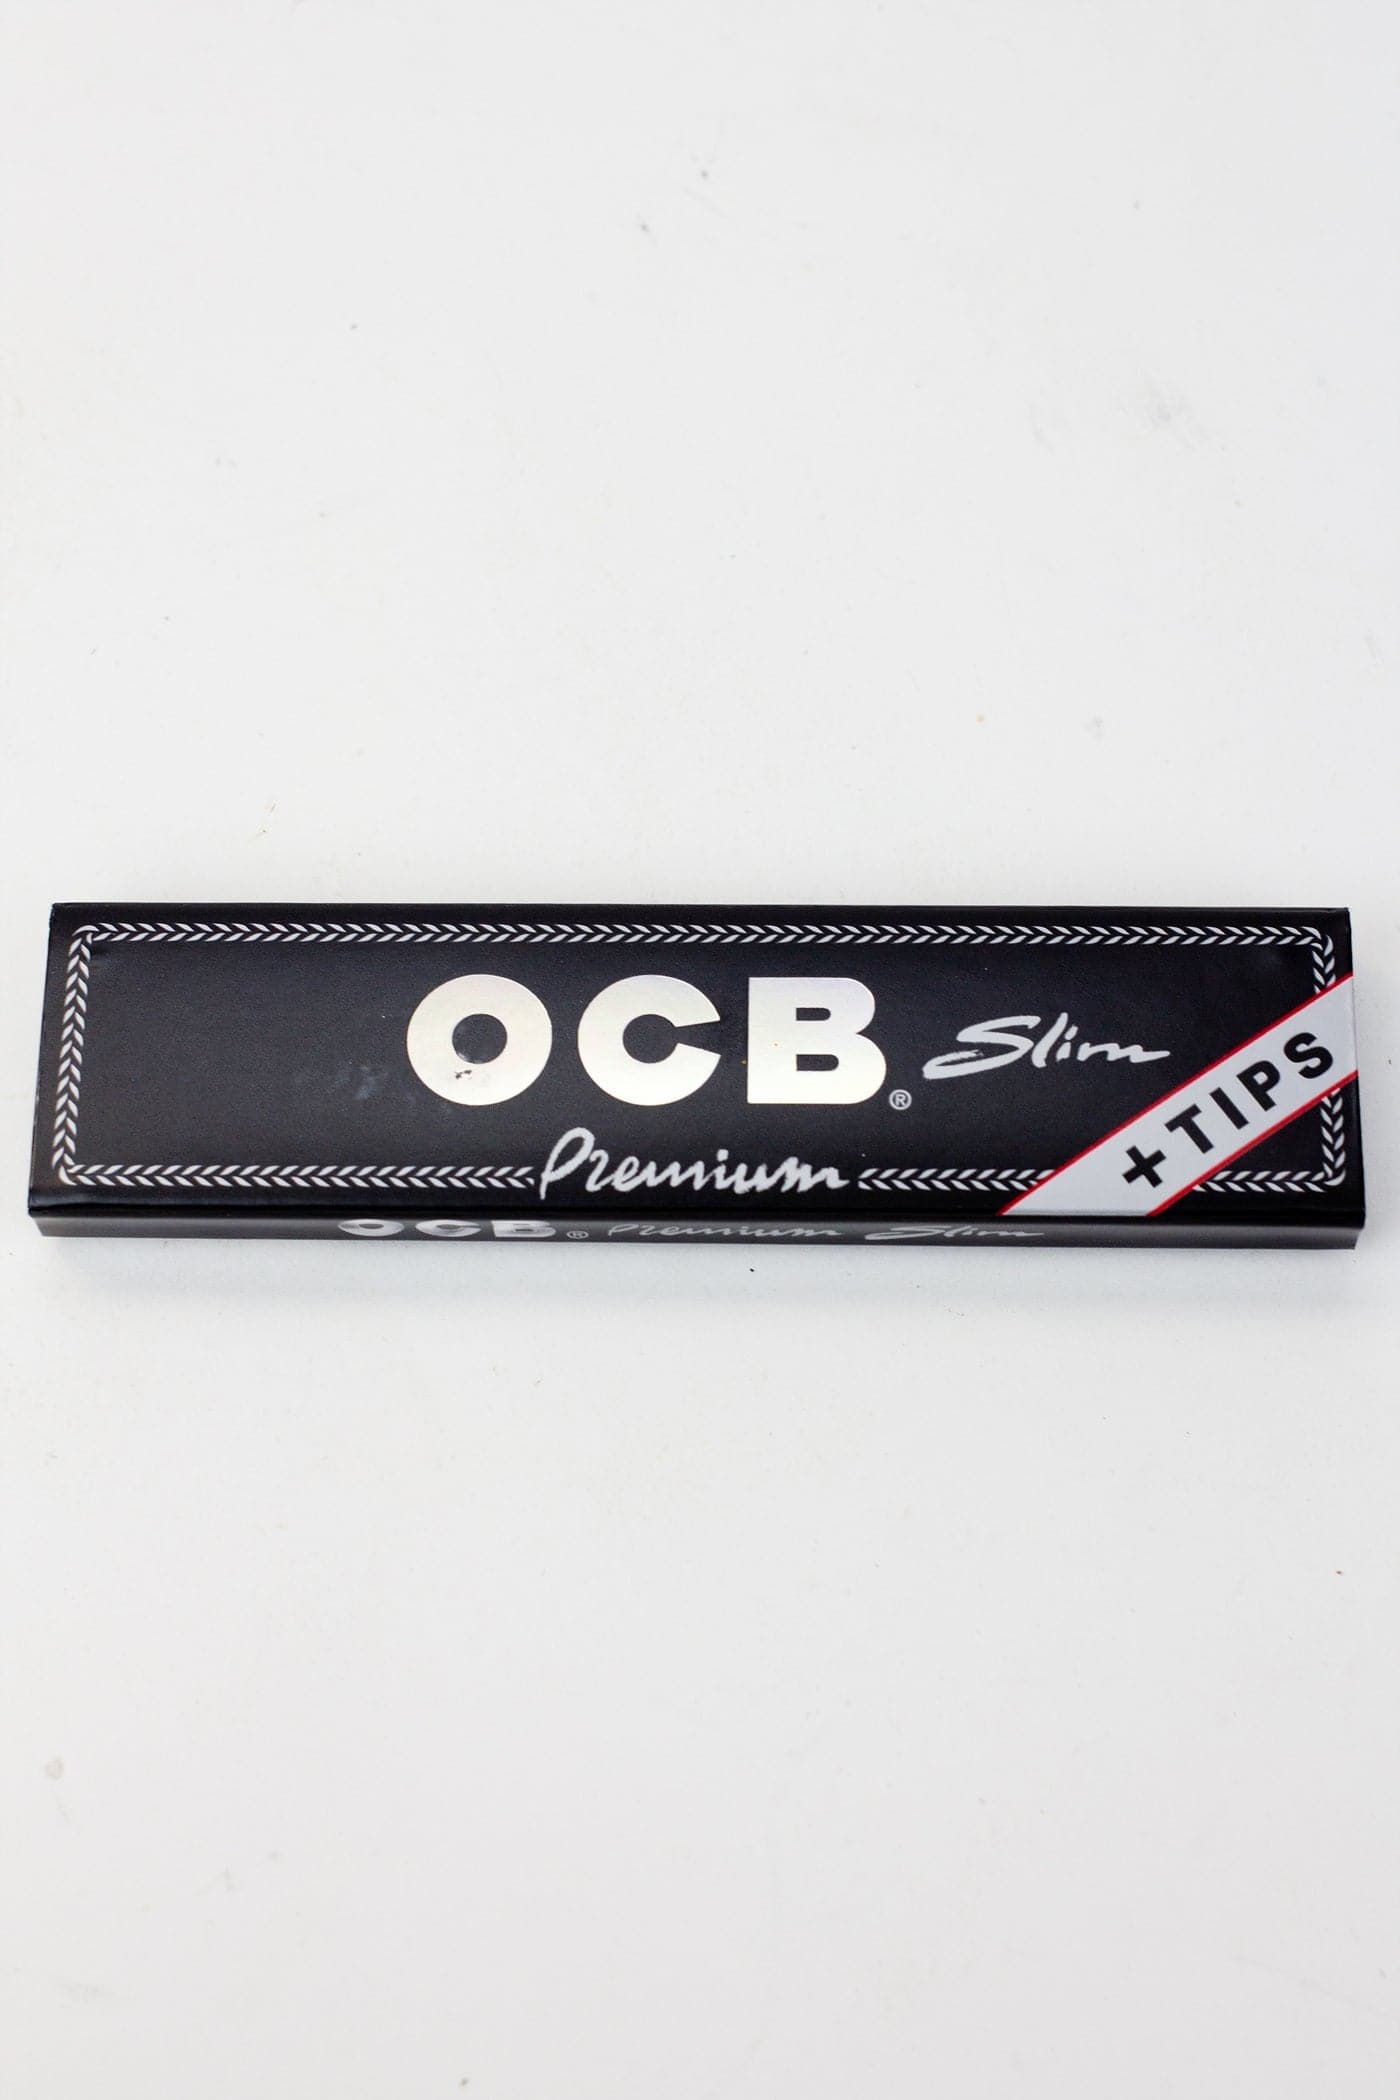 OCB King Slim Premium rolling paper with Tips